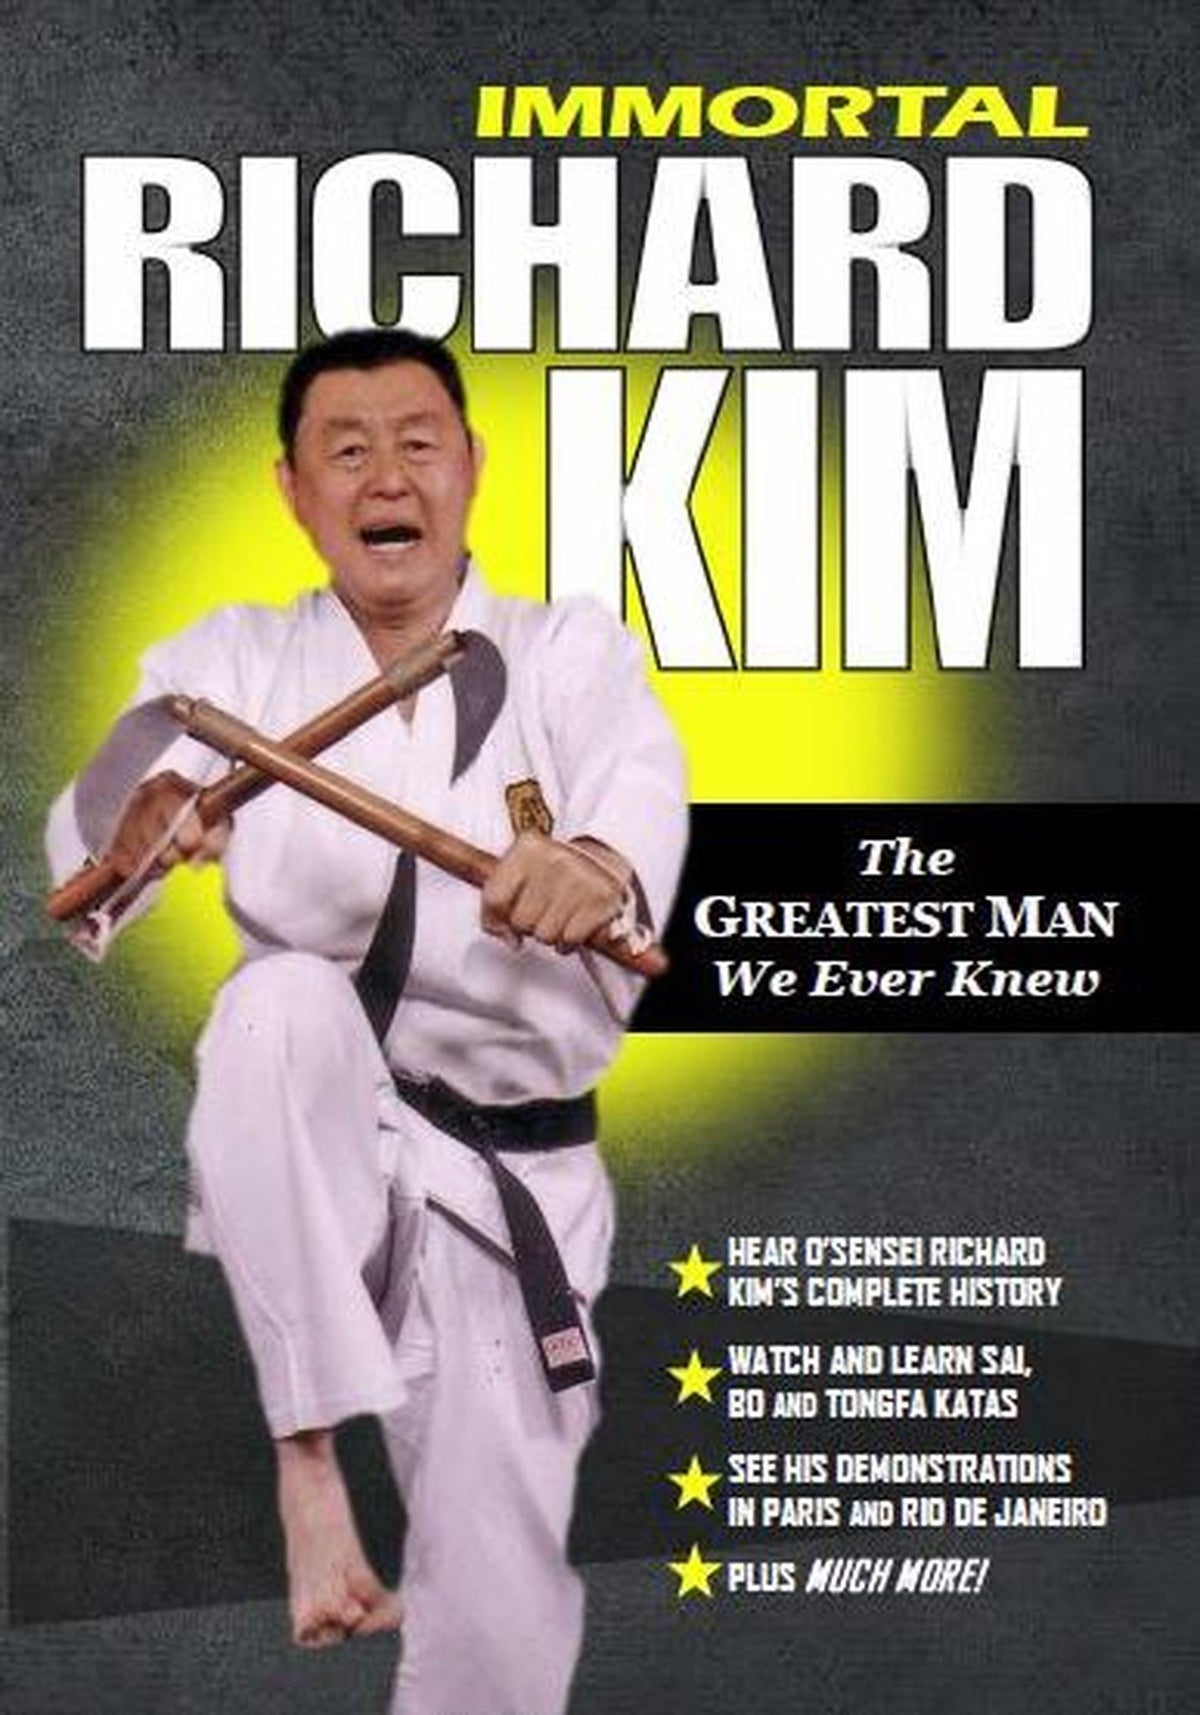 The Immortal Richard Kim (Greatest Man We Ever Knew) DVD martial arts master